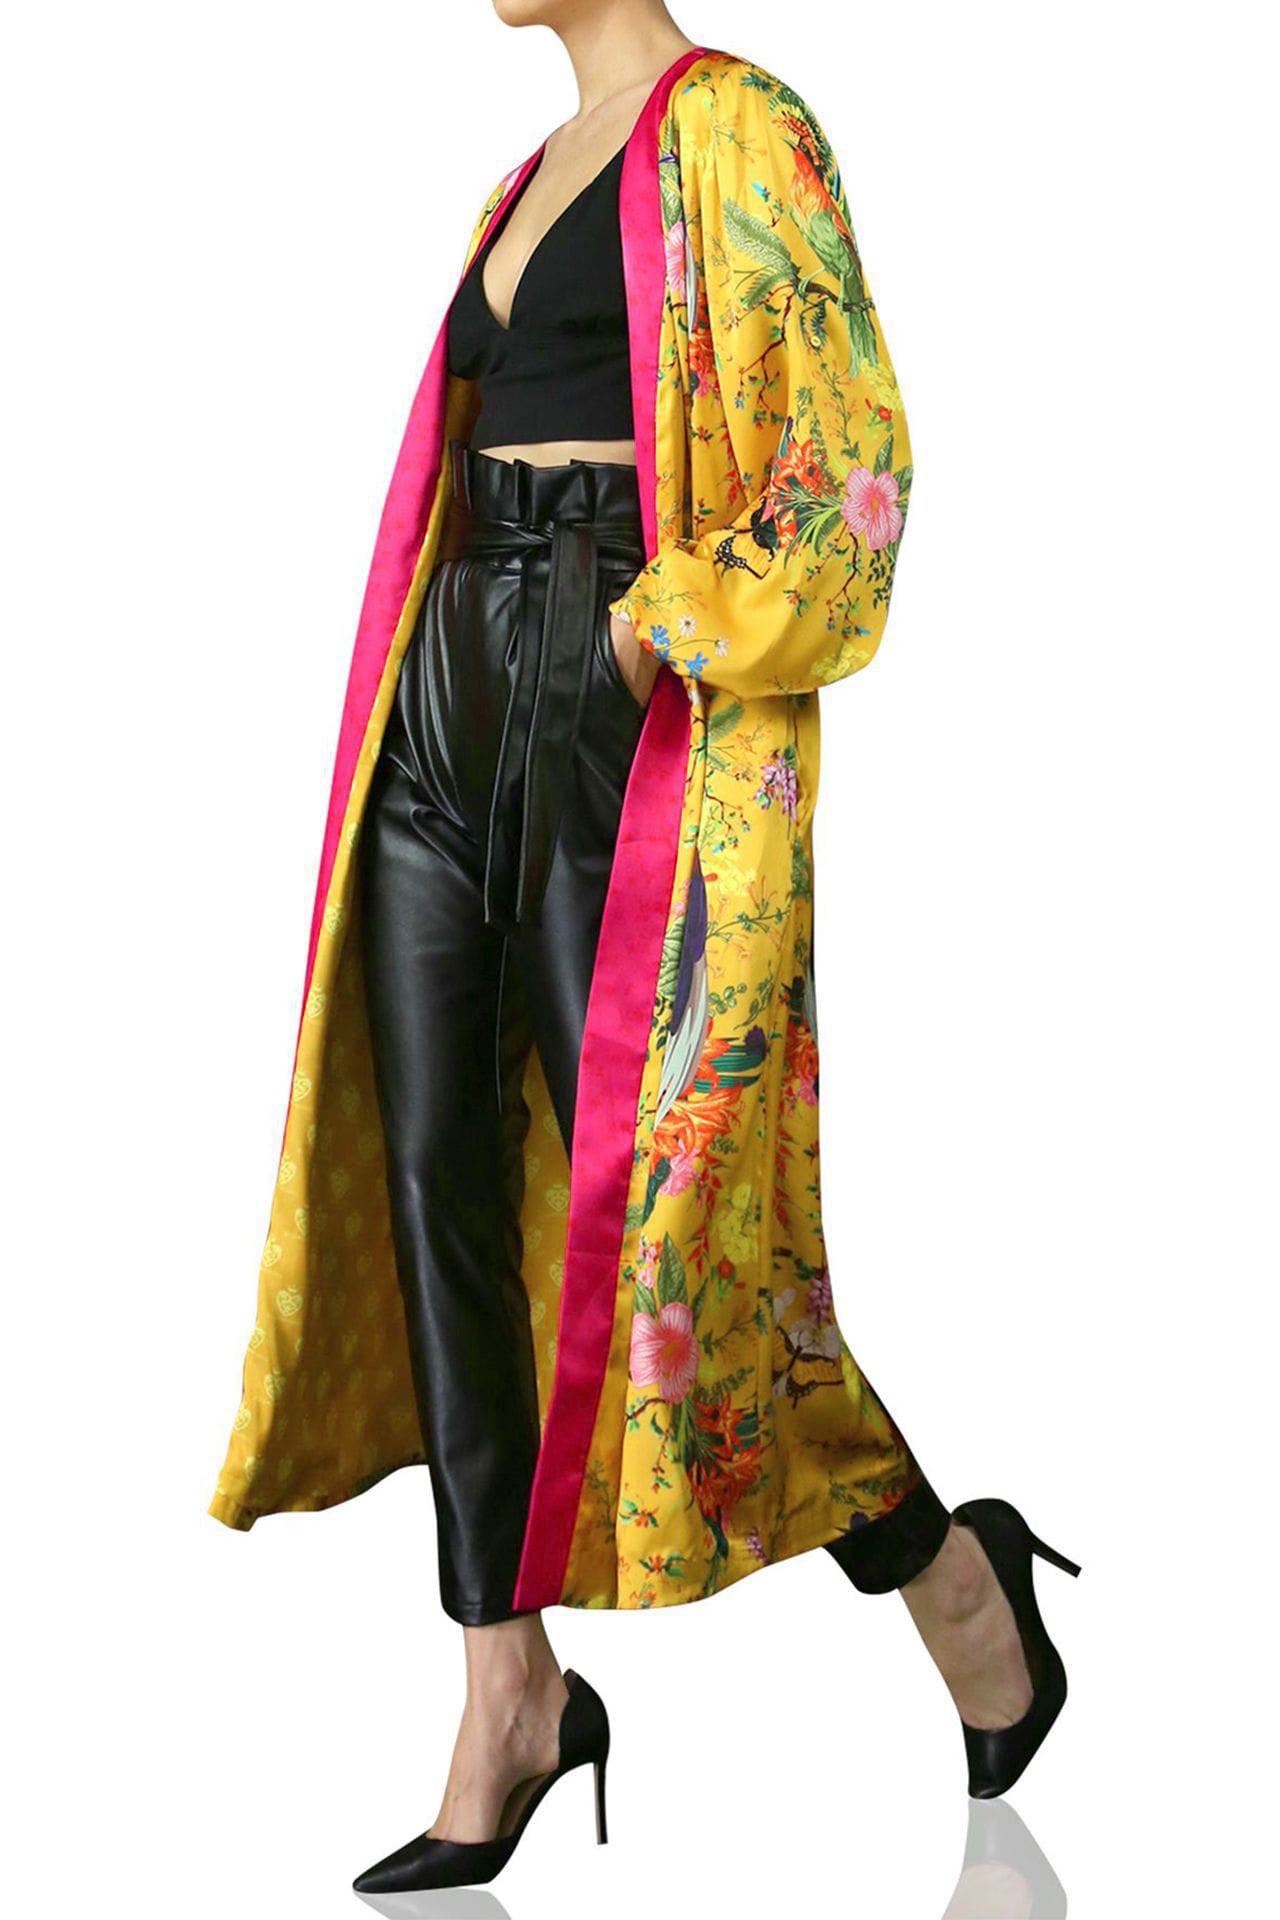 "kimono silk robe women's" "Kyle X Shahida" "womens long kimono" "long kimono robe womens" "yellow silk robe"